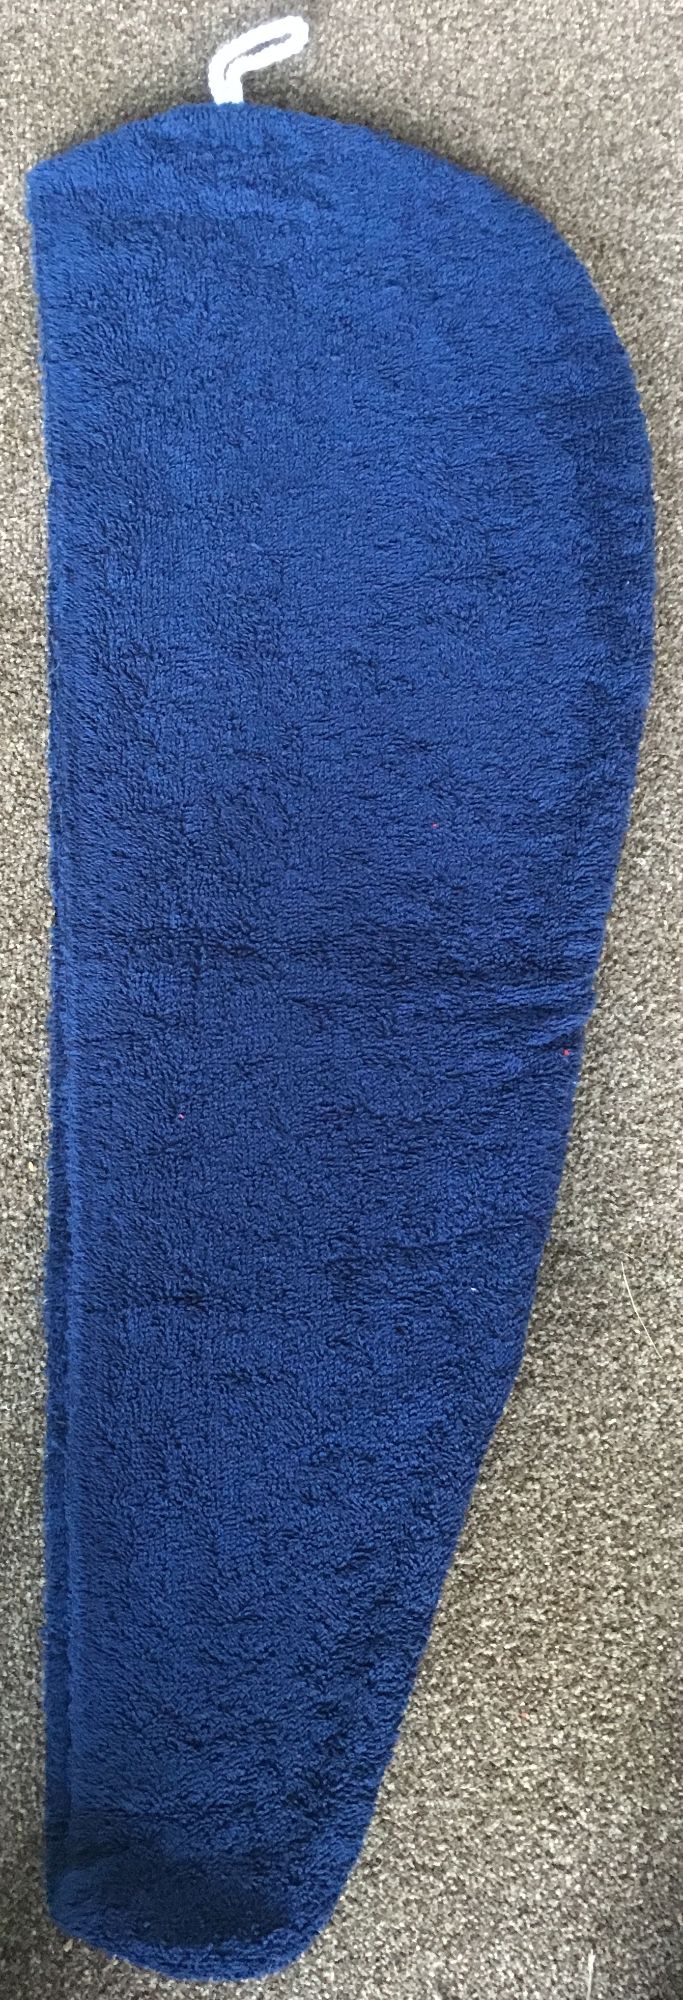 NAVY BLUE TURBIE TOWEL